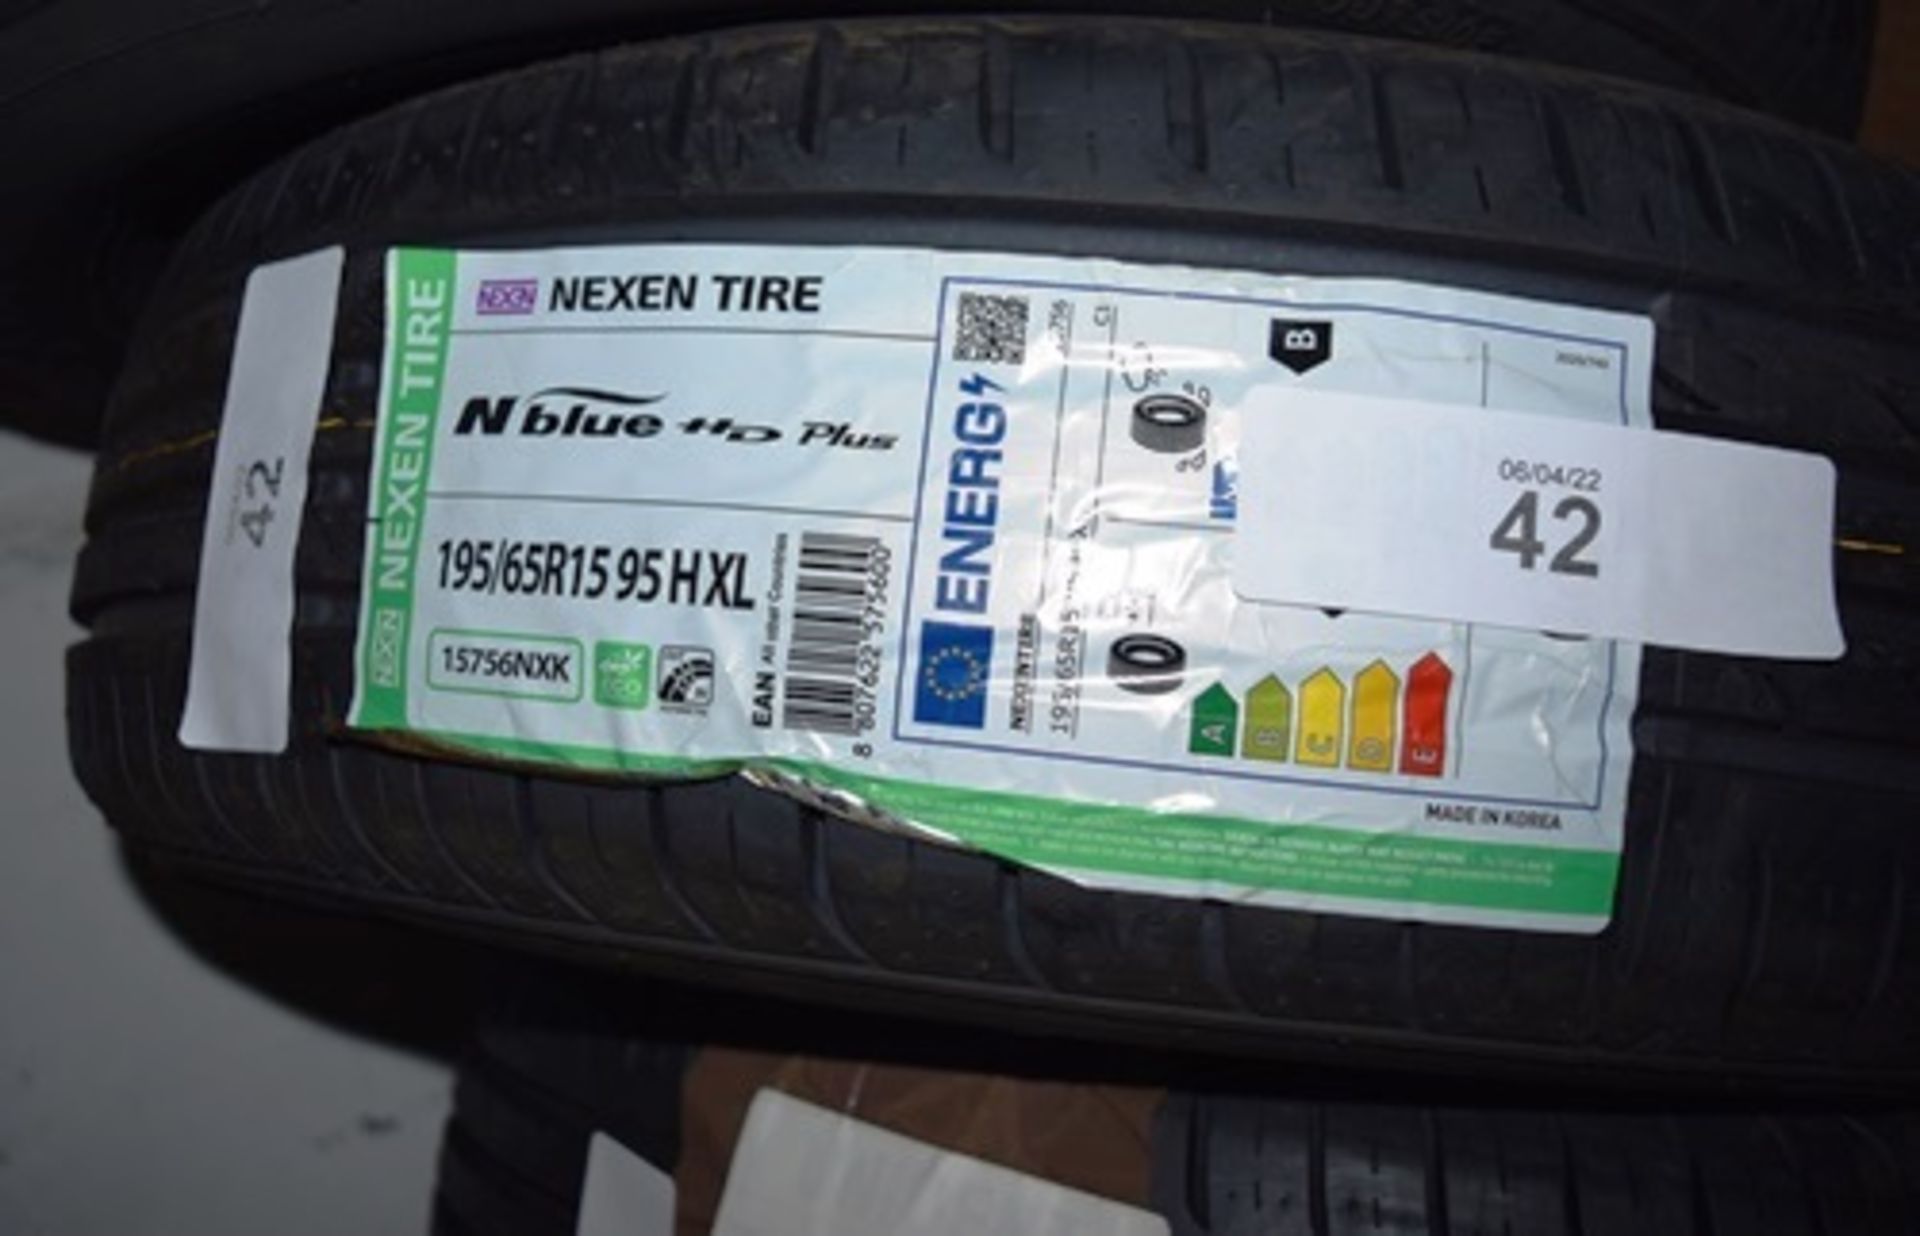 1 x Nexen N Blue HD Plus tyre, size 195/65R15 95H XL - New with label (GS7)